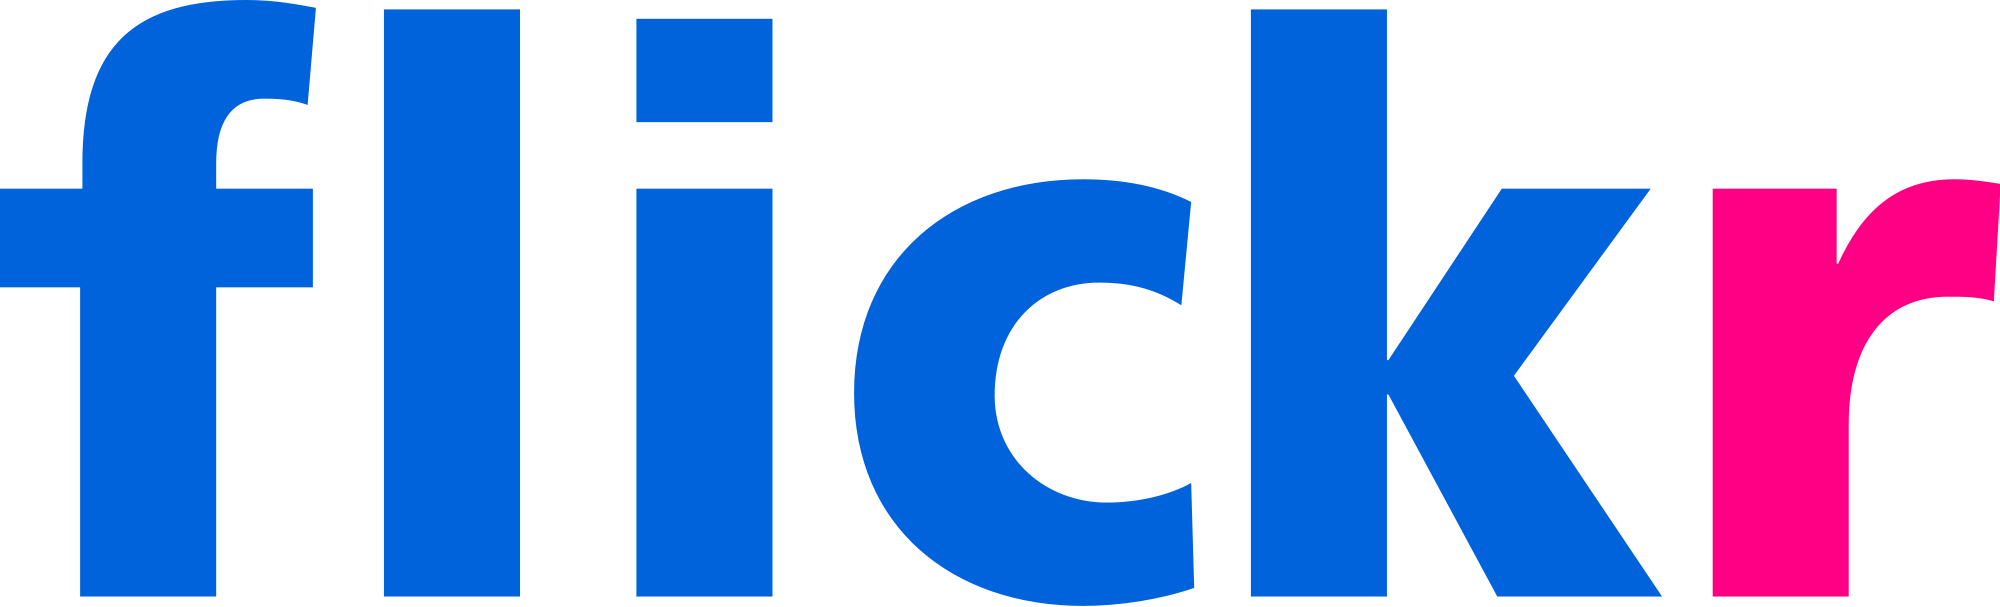 Flickr Logo Png (2000x607)